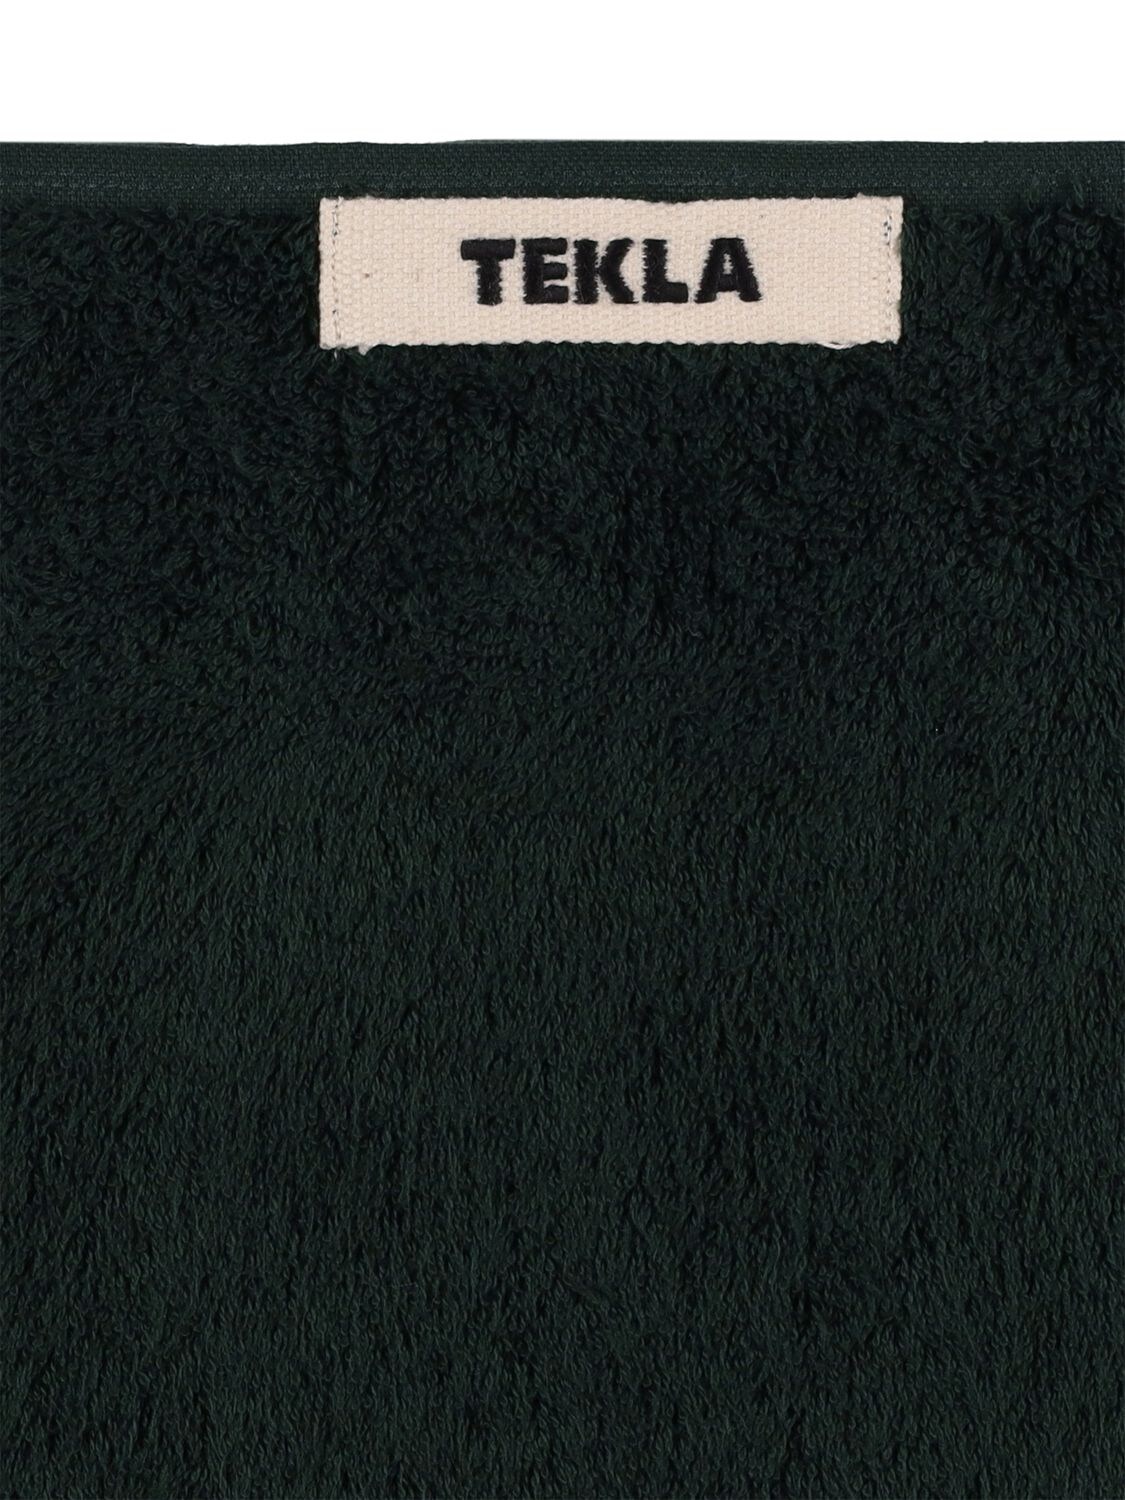 Shop Tekla Set Of 3 Organic Cotton Towels In Green